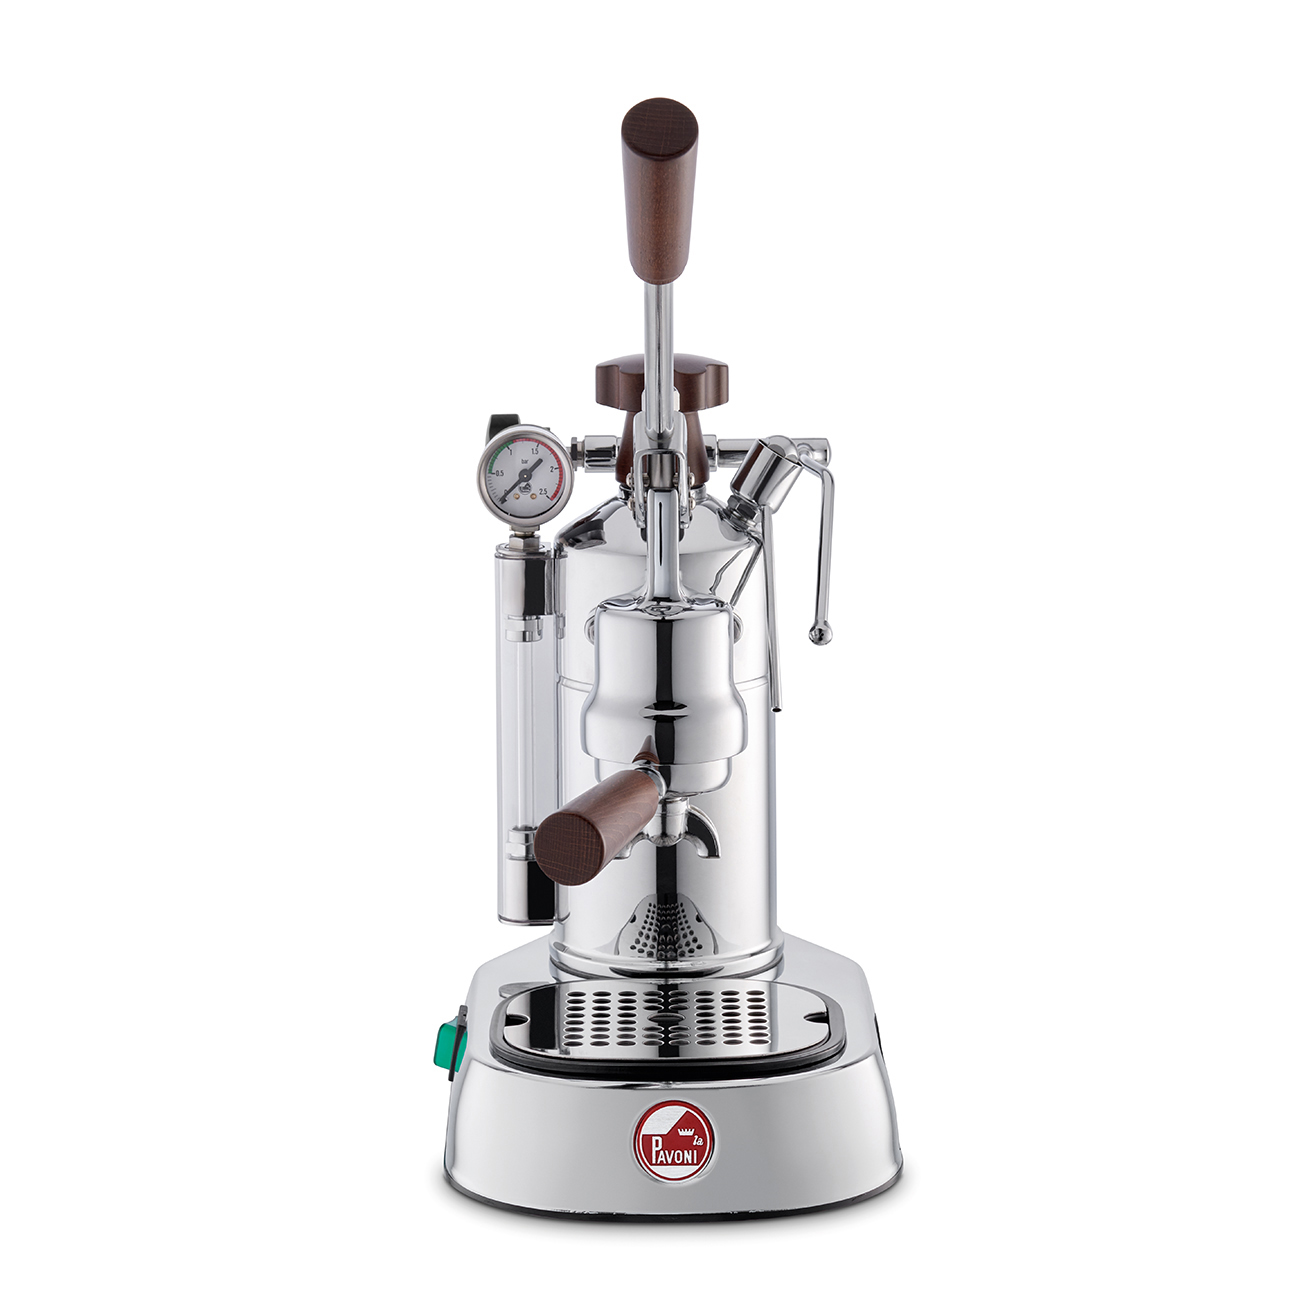 La Pavoni Professional Lusso espresso machine with wooden handles